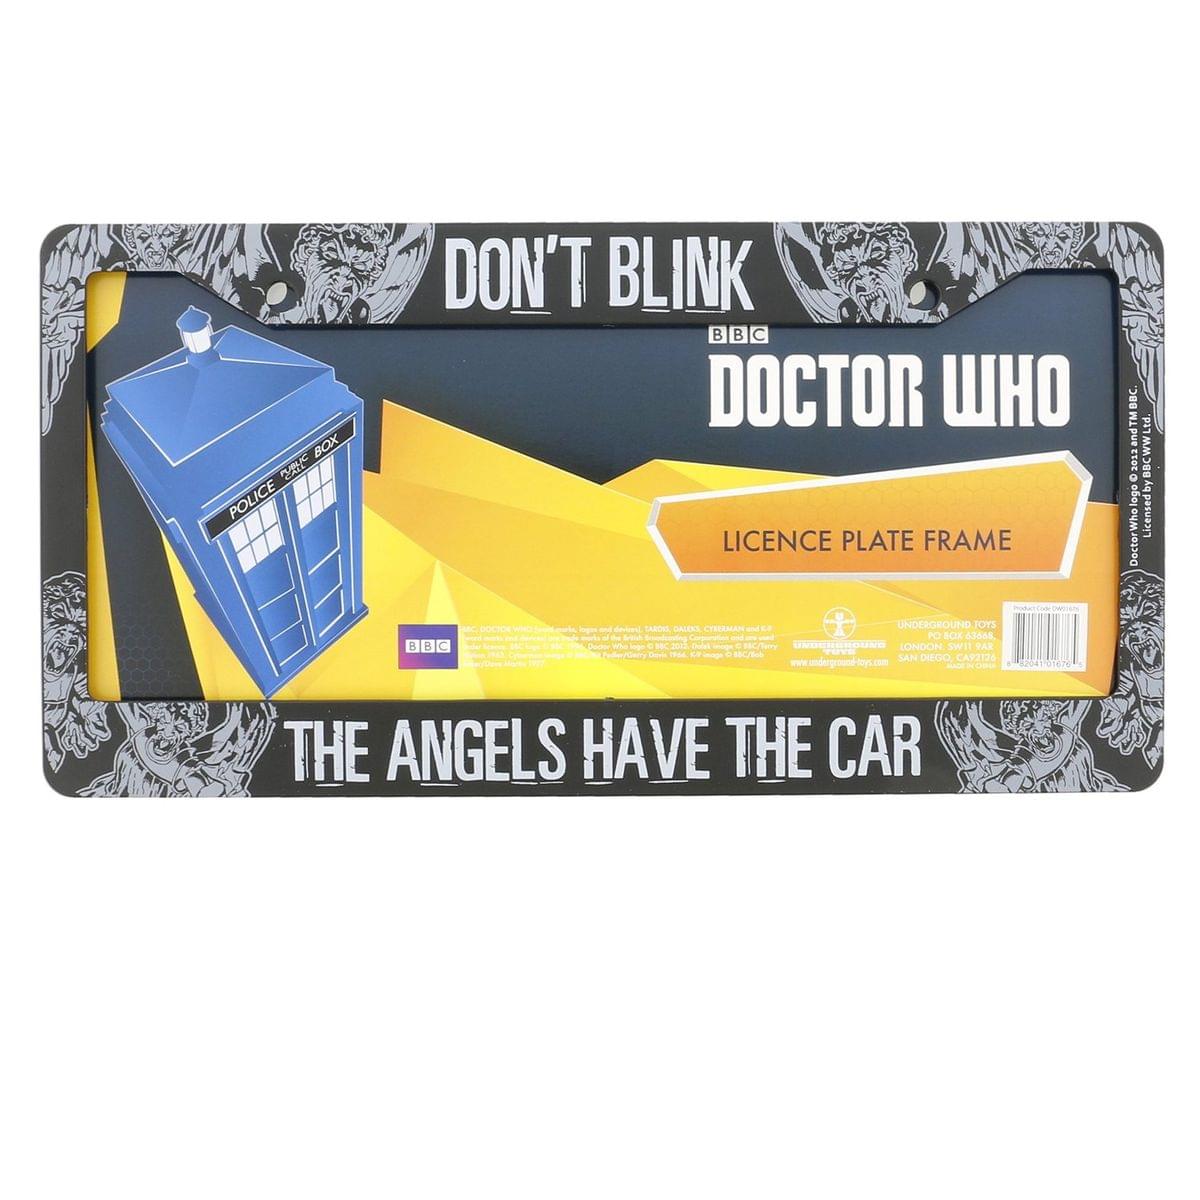 Doctor Who License Plate Frame: Don't Blink